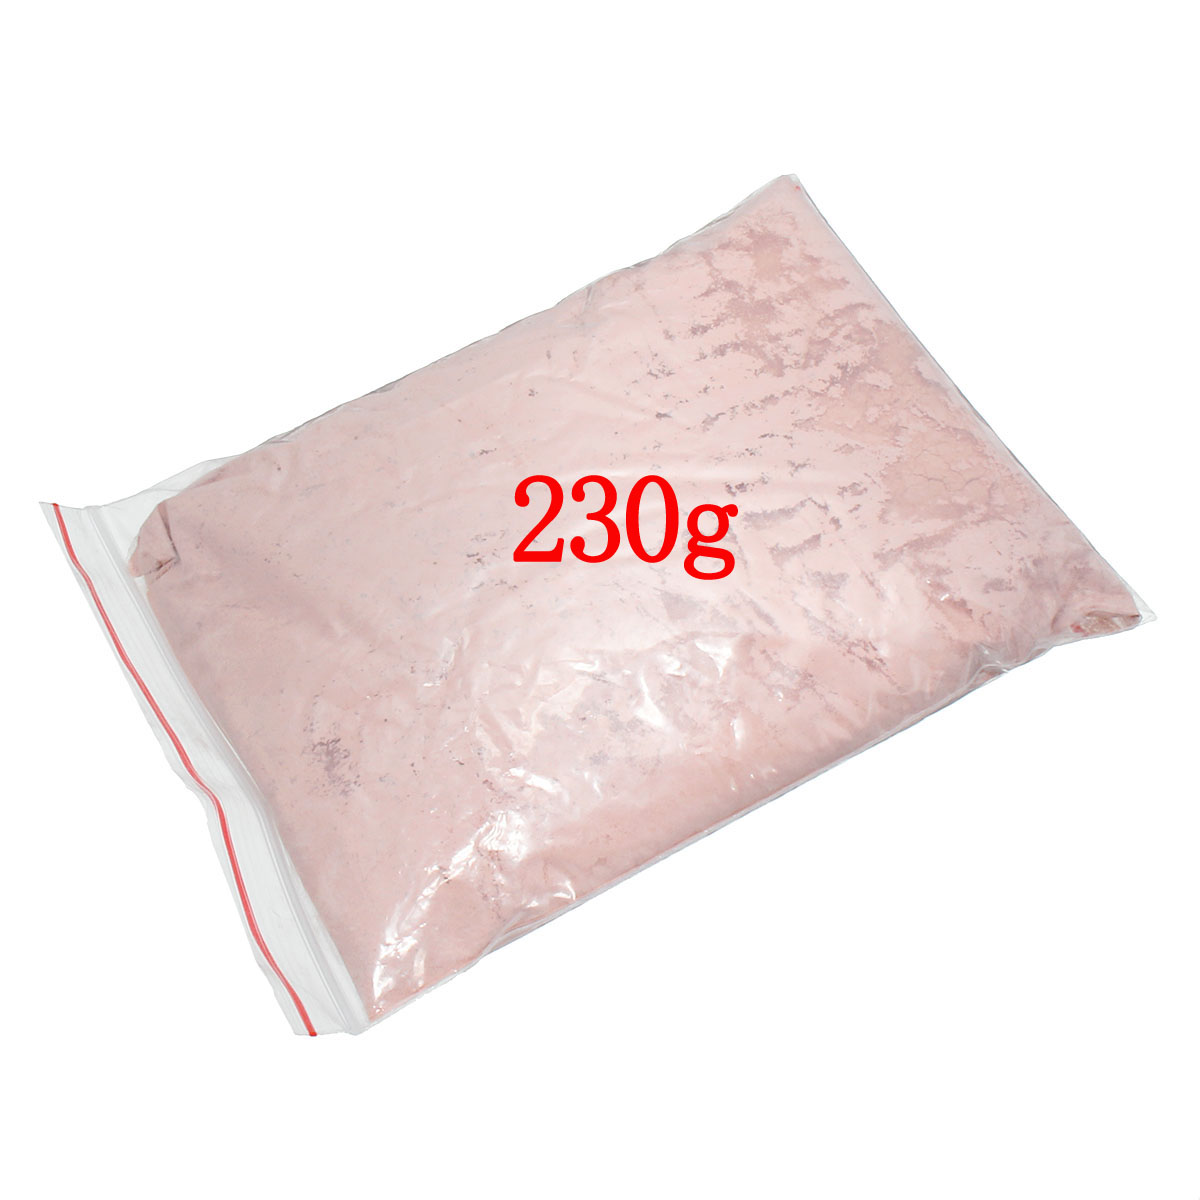 11Pcs-3inch-Pad-230g-Cerium-Oxide-Windscreen-Scratch-Remover-Glass-Polishing-Kit-1160035